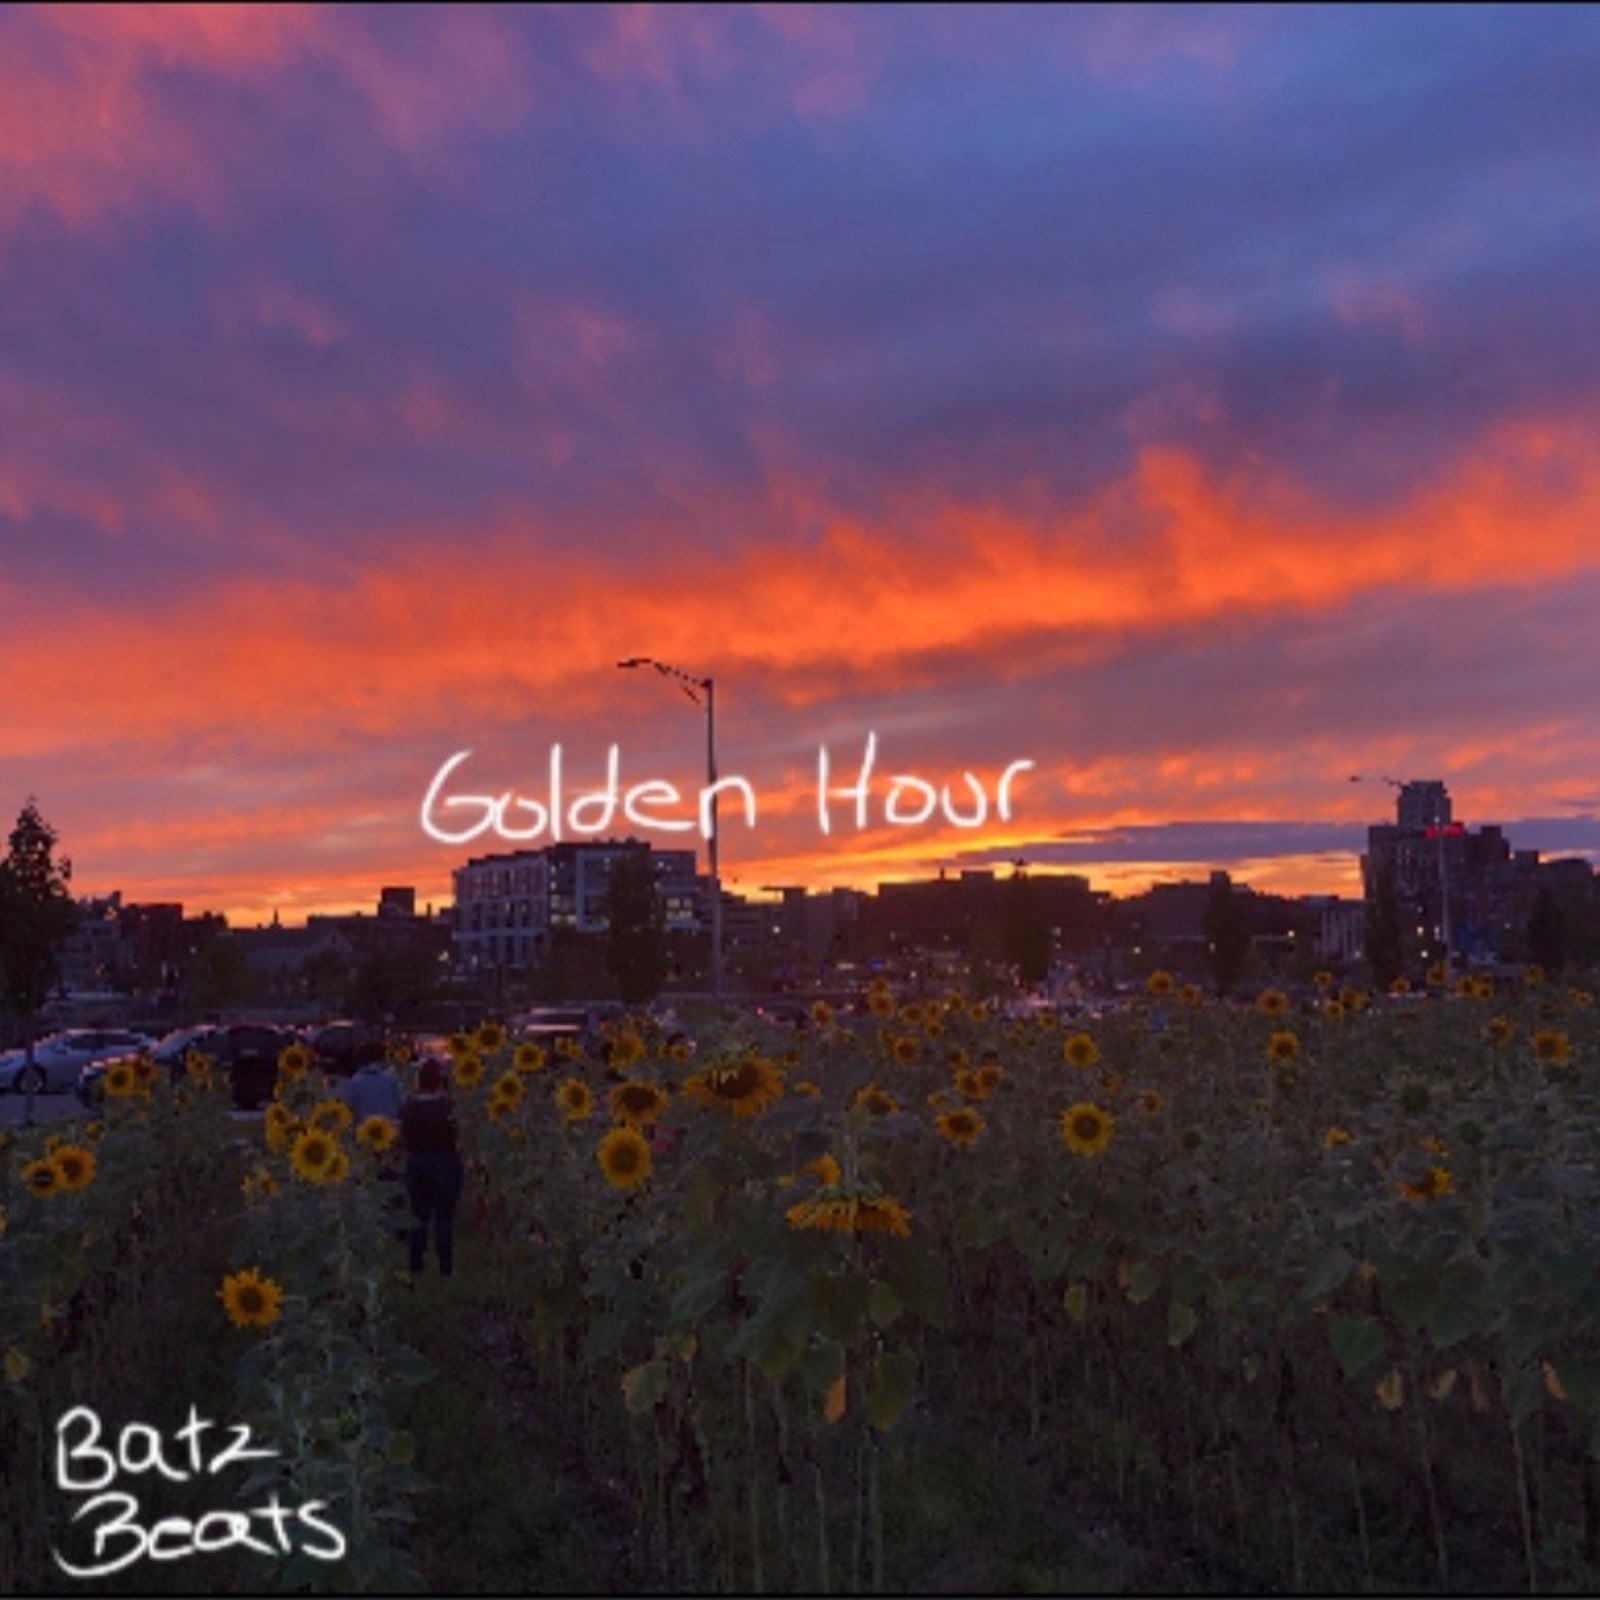 Golden hour песня. Golden hour слушать. Golden hour картинка песни. Shine its your Golden hour песня.